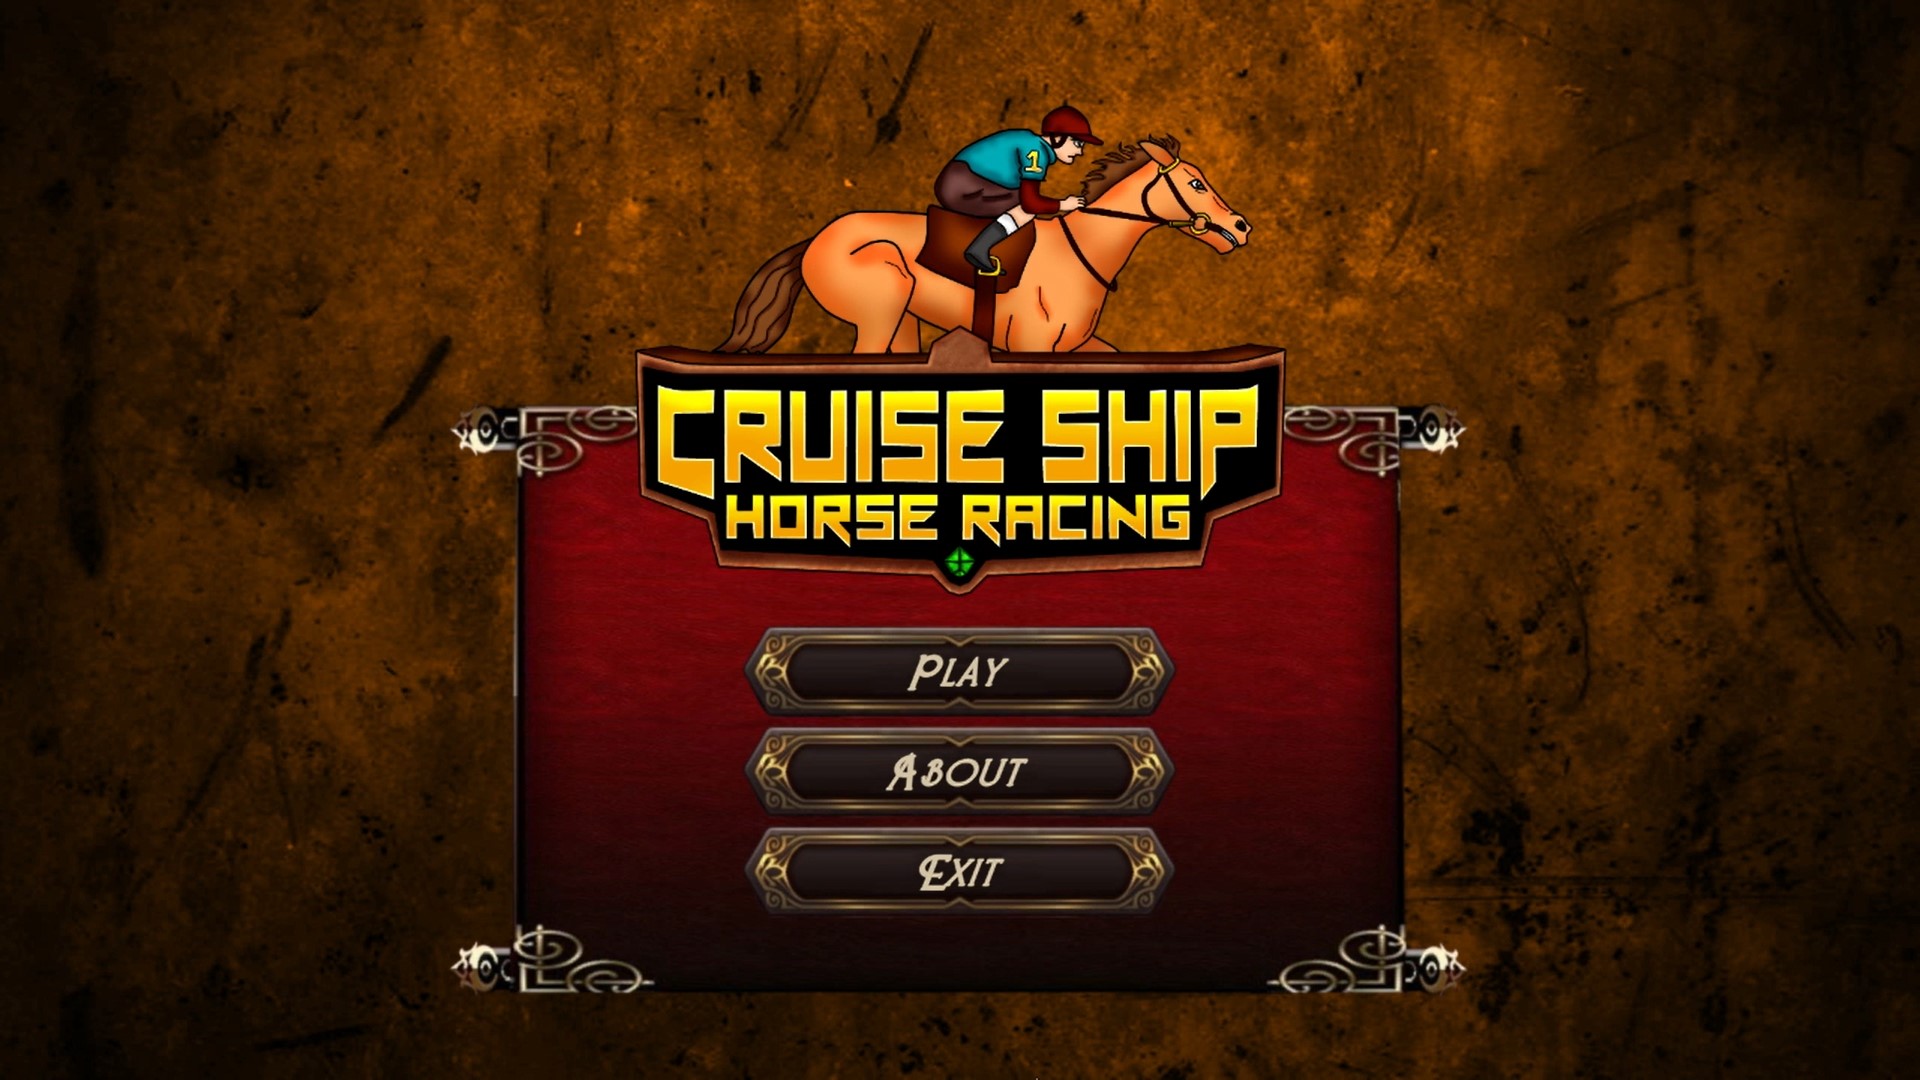 Cruise Ship Horse Racing main page screenshot